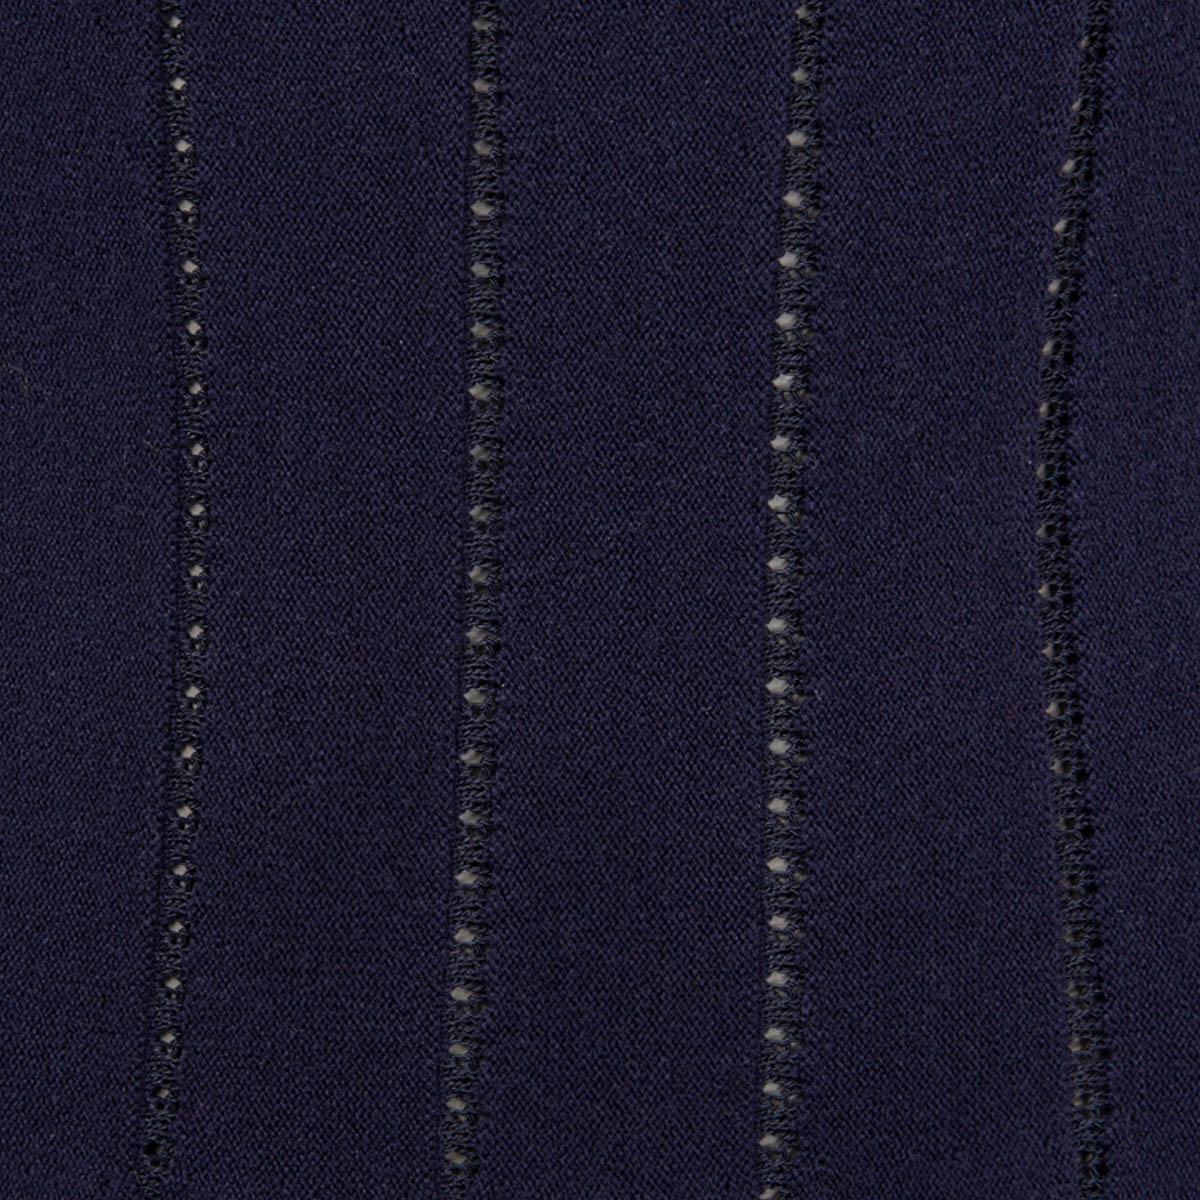 ALAIA navy blue wool blend JACQUARD KNIT FLARED Dress 40 M 2